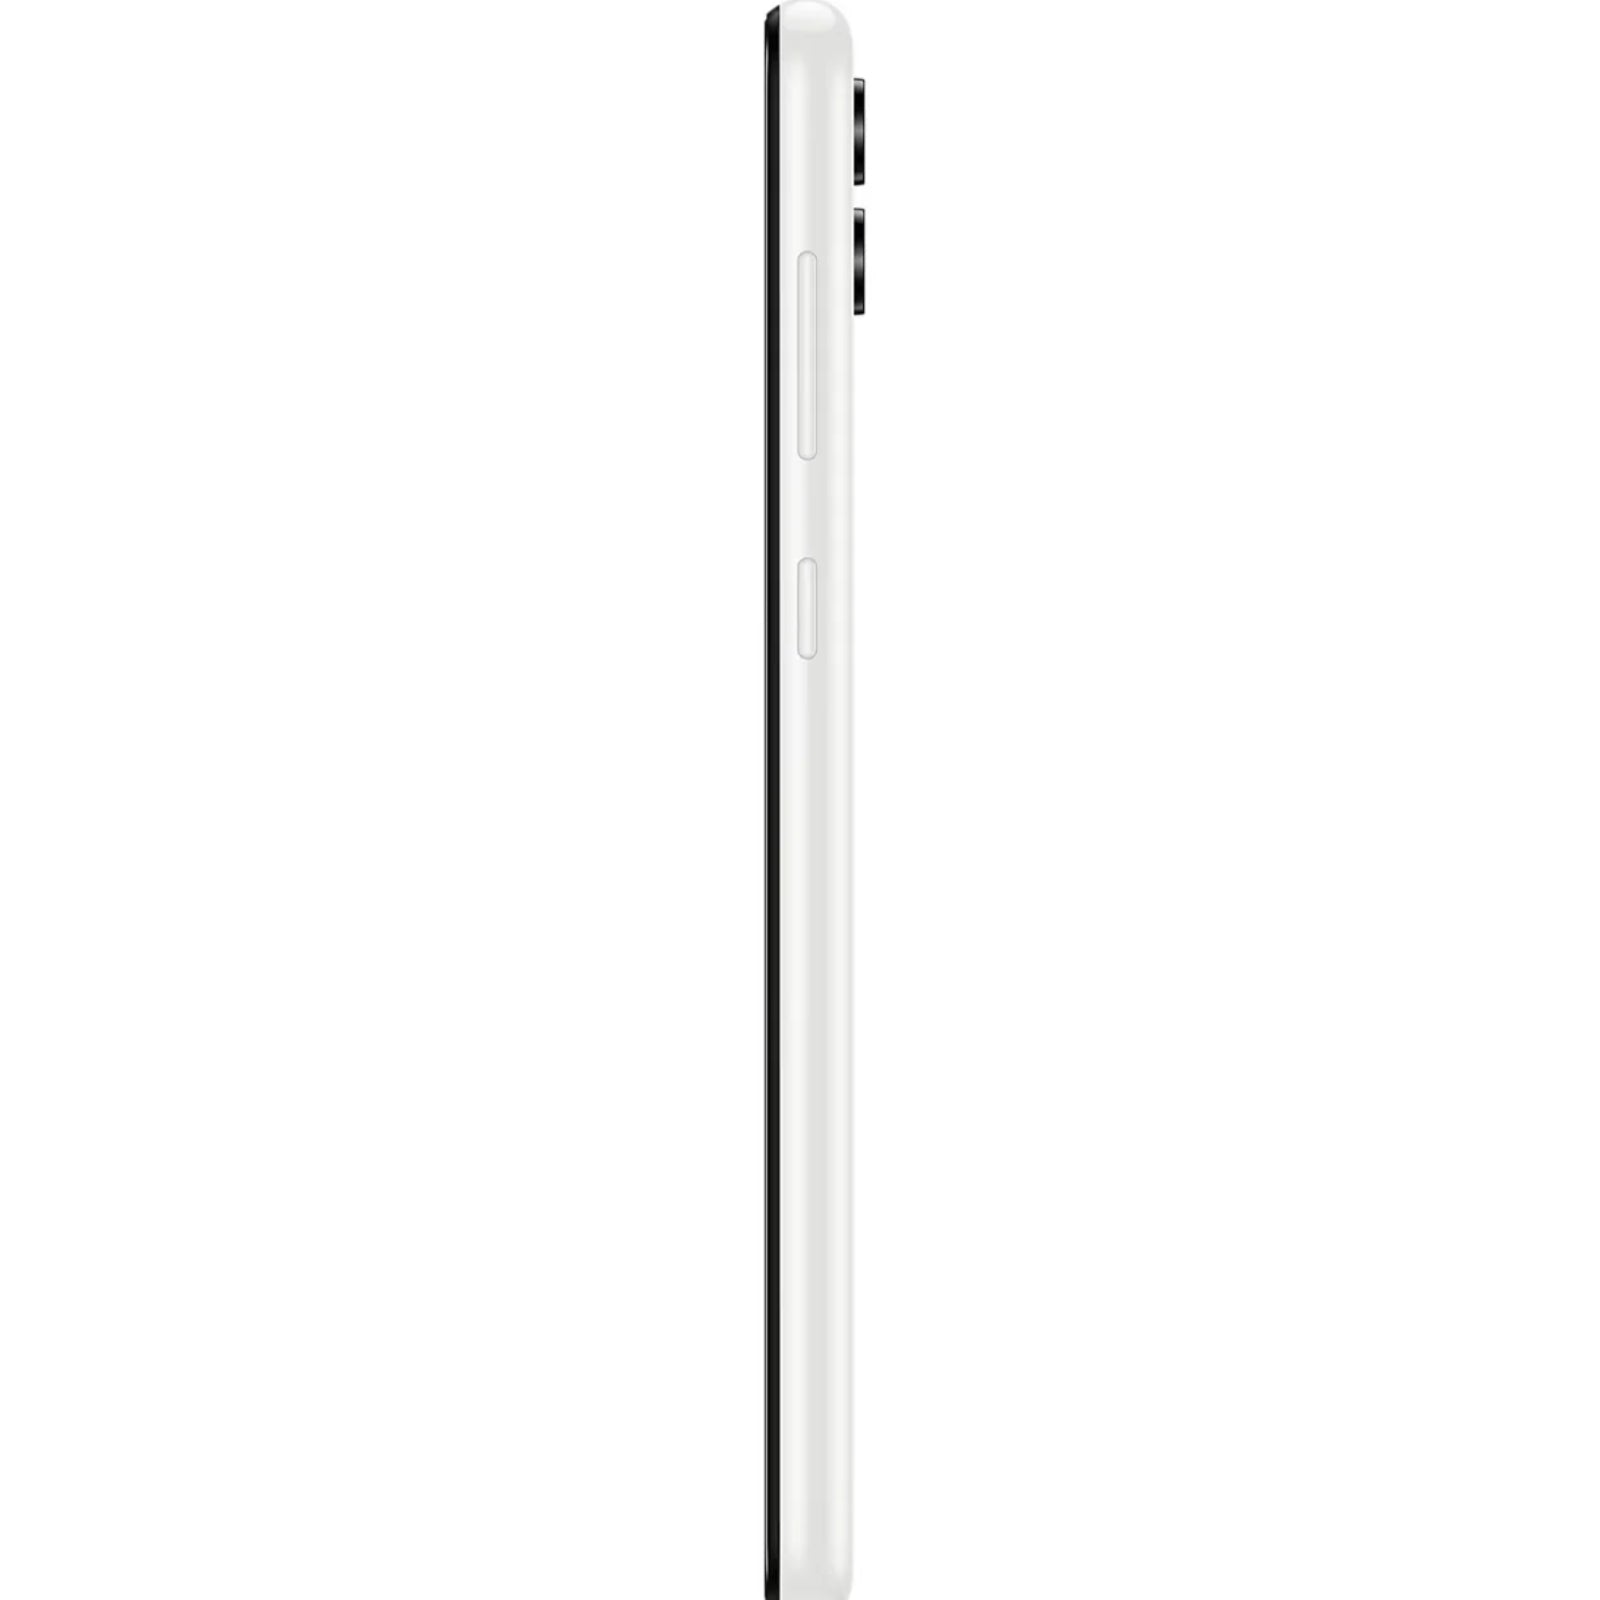 Samsung Galaxy A04 Dual nano sim A045FD (3GB ram) - MyMobile